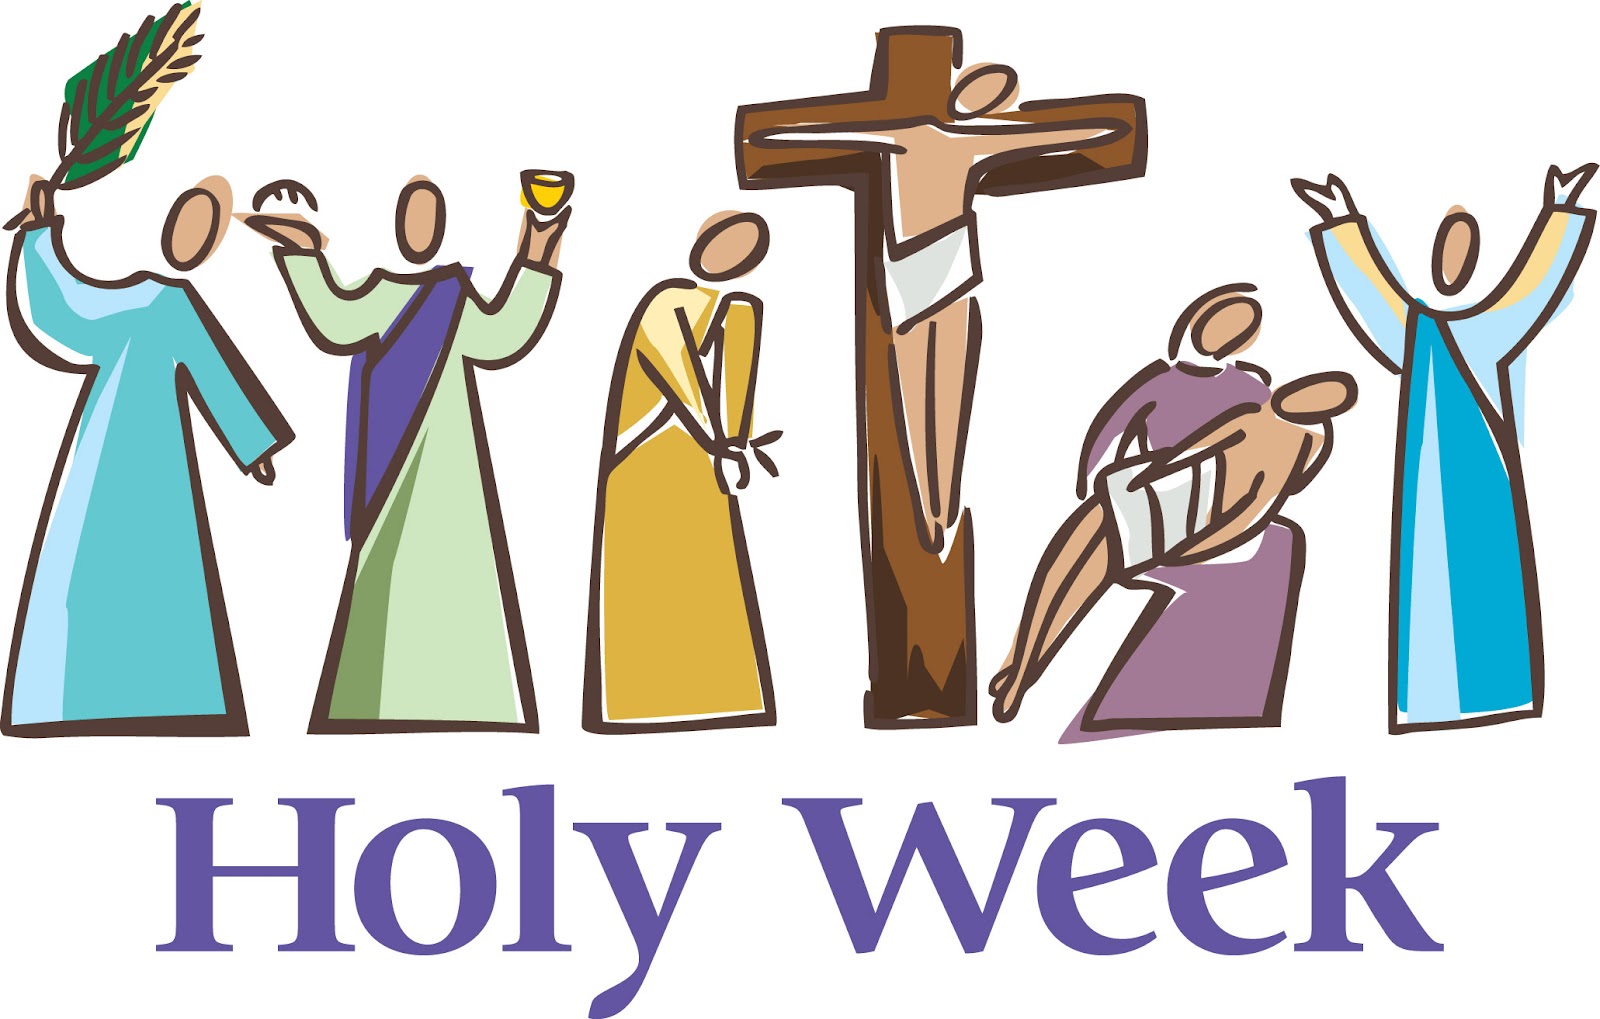 Sacerdotus My thoughts on Holy Week